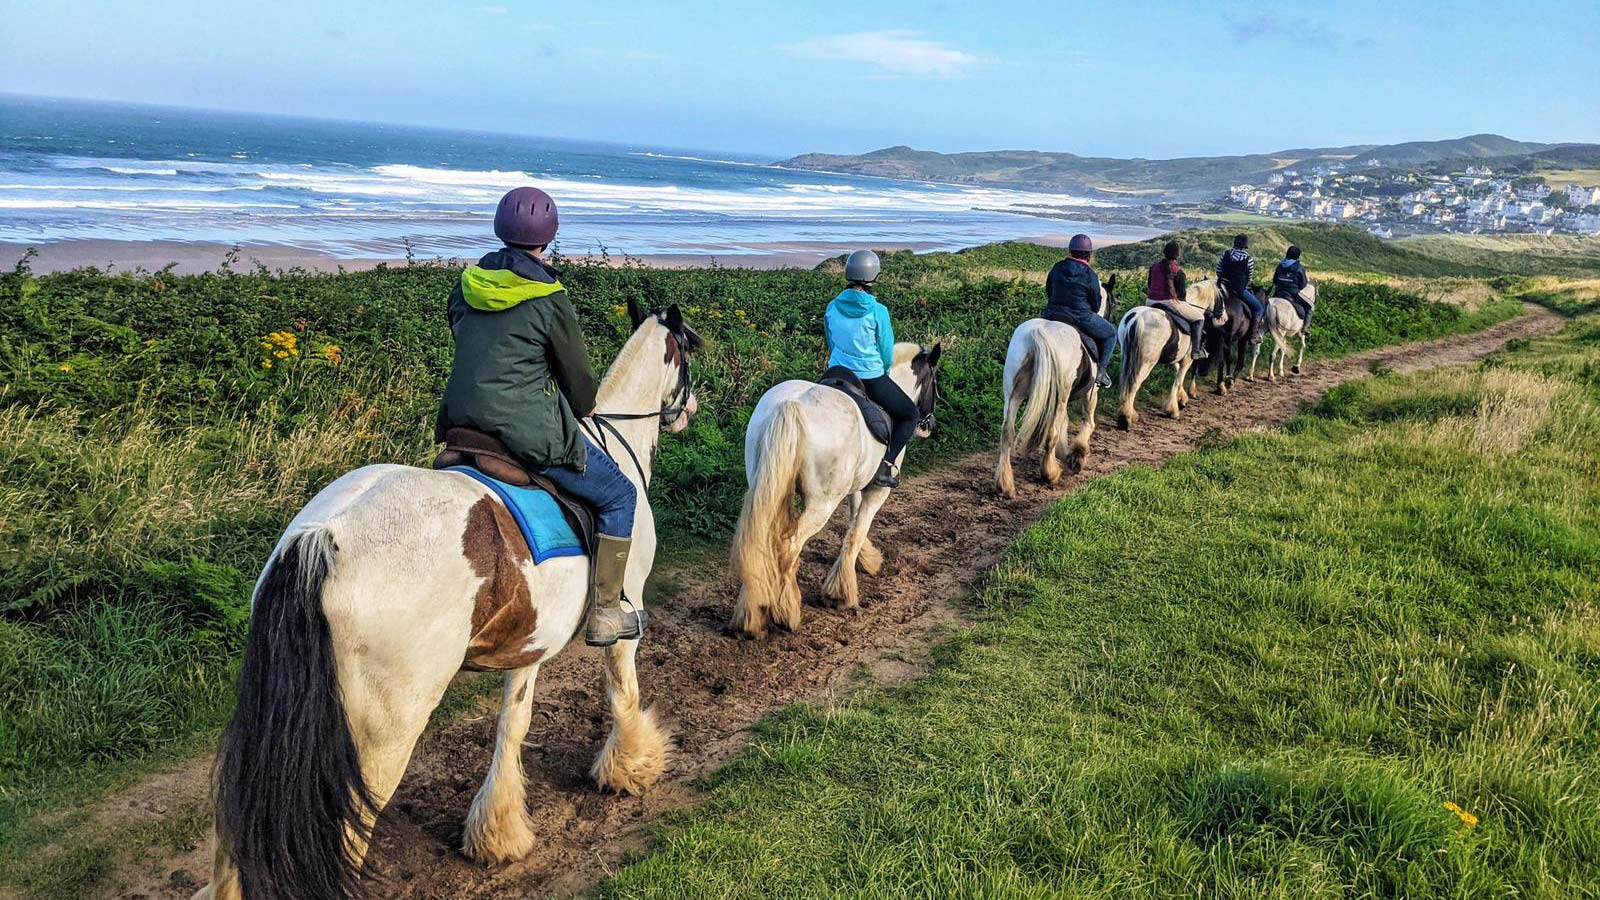 image of people on horses riding along the coast